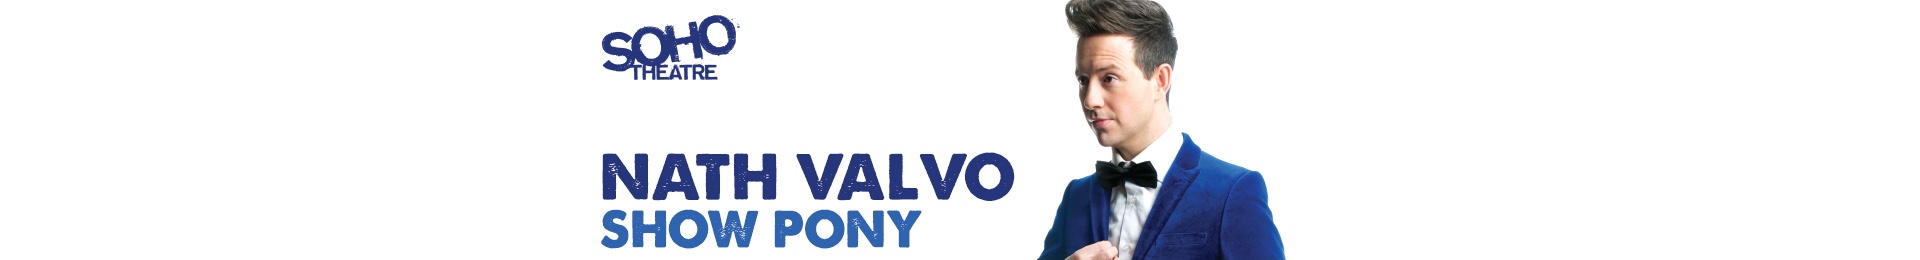 Nath Valvo: Show Pony banner image